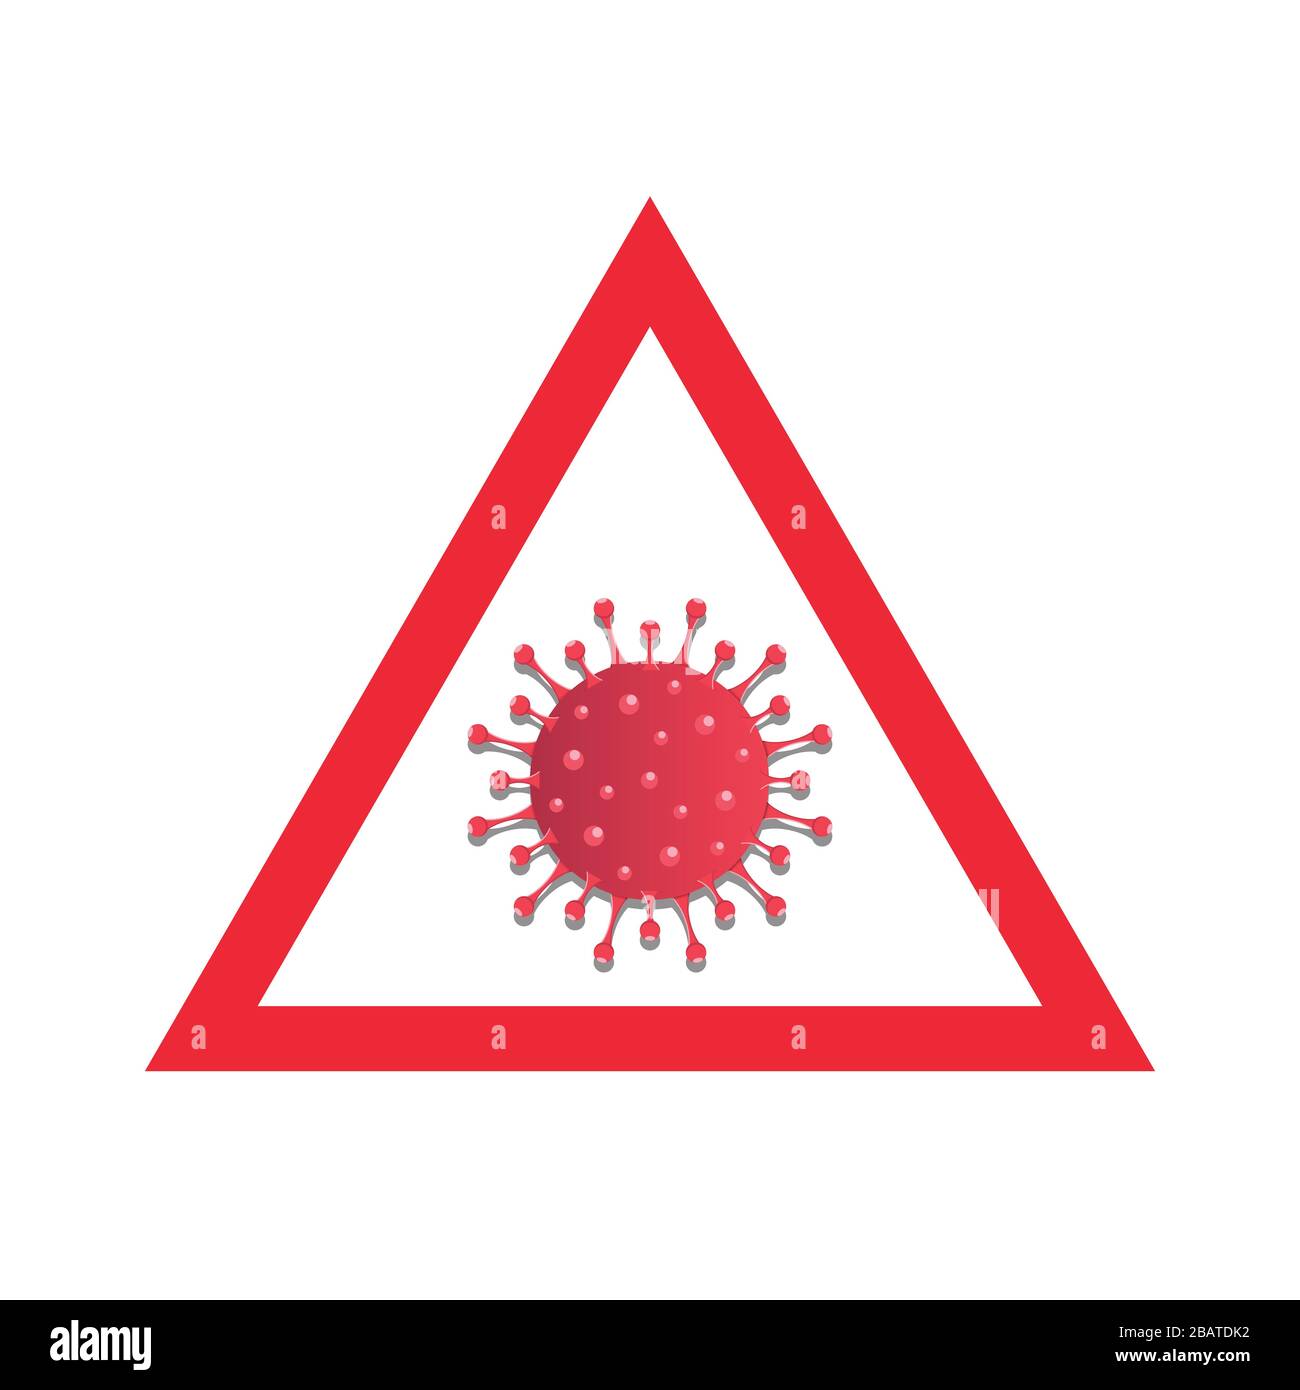 Virus - Coronavirus 2019-ncov, germe de maladie, organisme pathogène, micro-virologie infectieuse Illustration de Vecteur